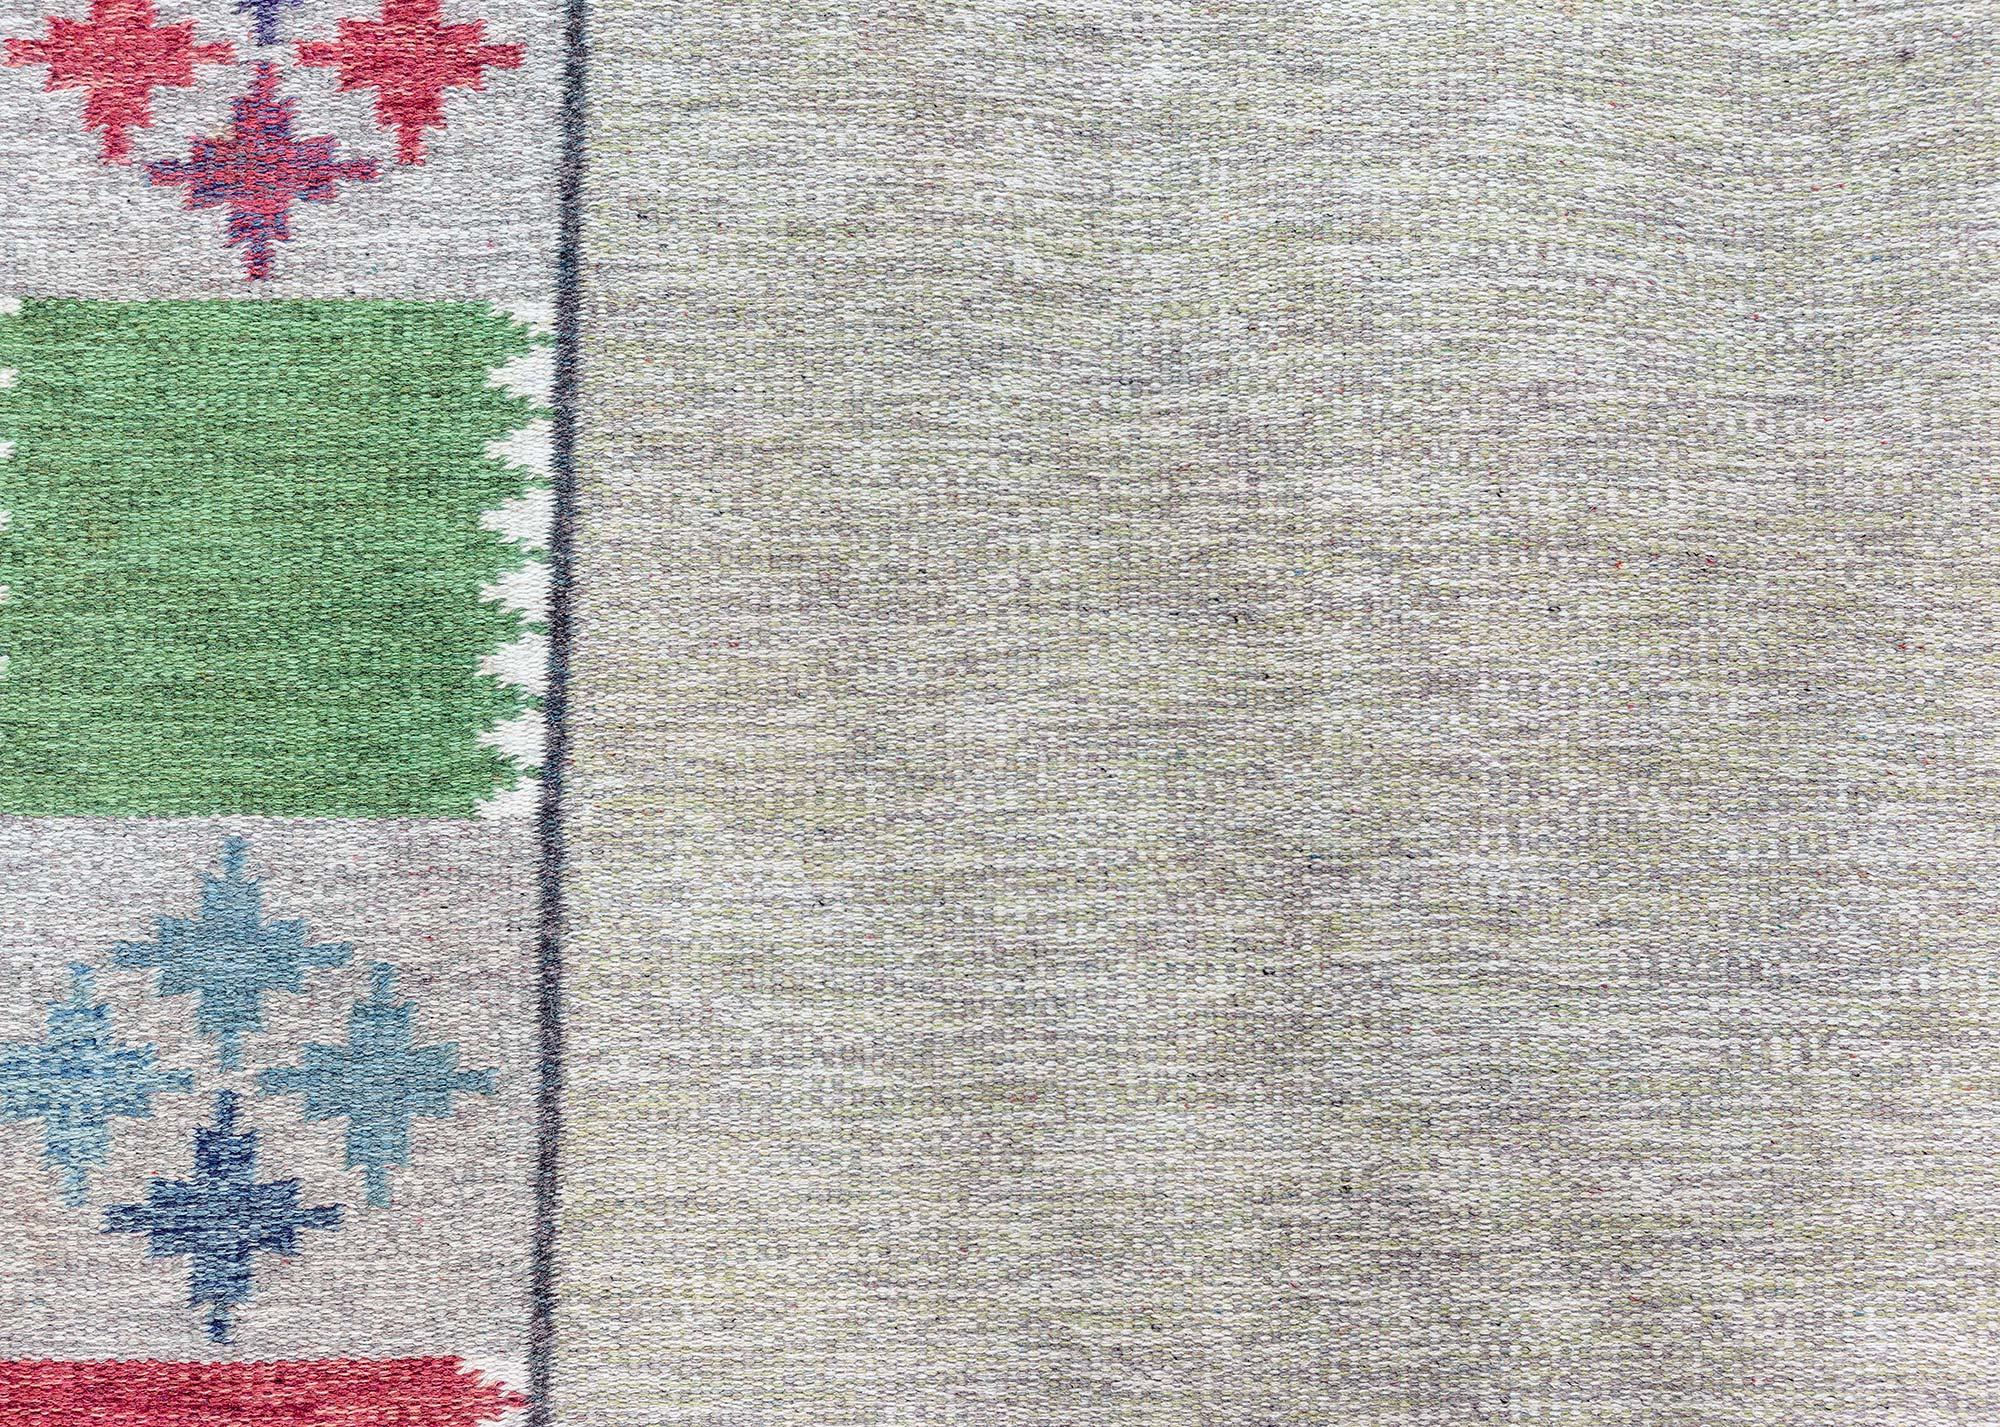 Mid Century Swedish flat woven rug by Bitte Ahlgren (BA)
Size: 6'3